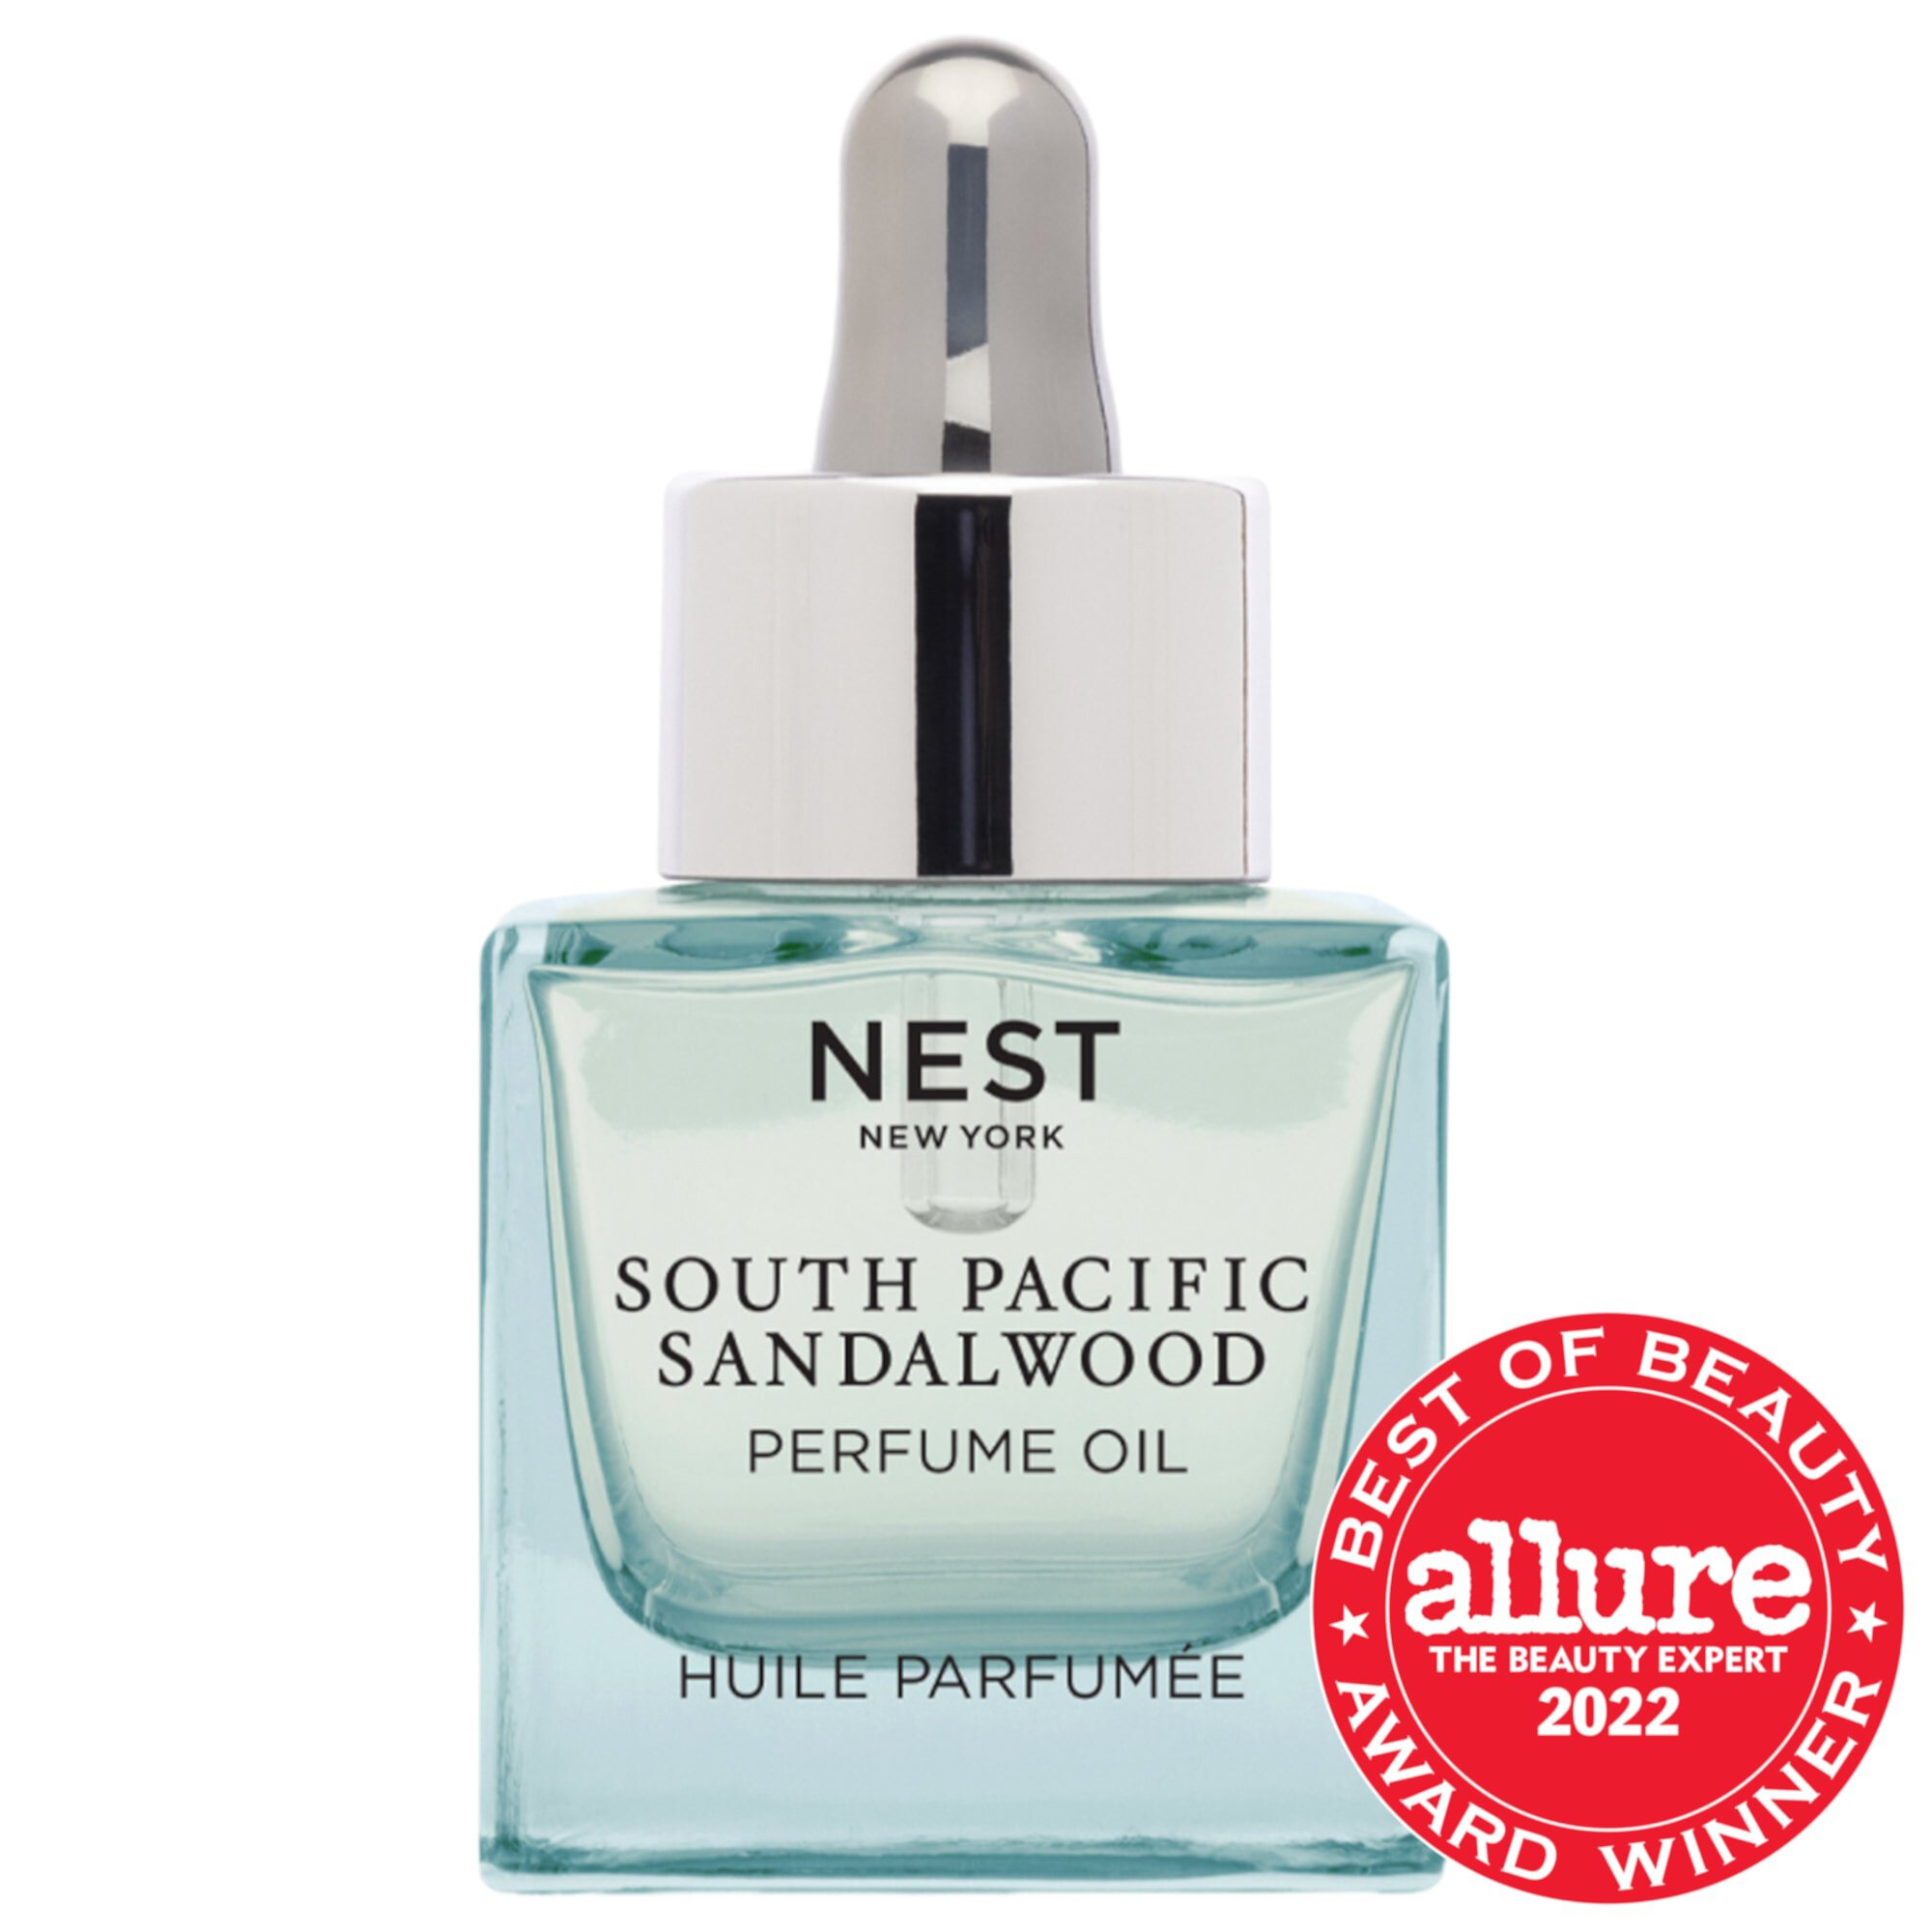 South Pacific Sandalwood Perfume Oil Nest New York